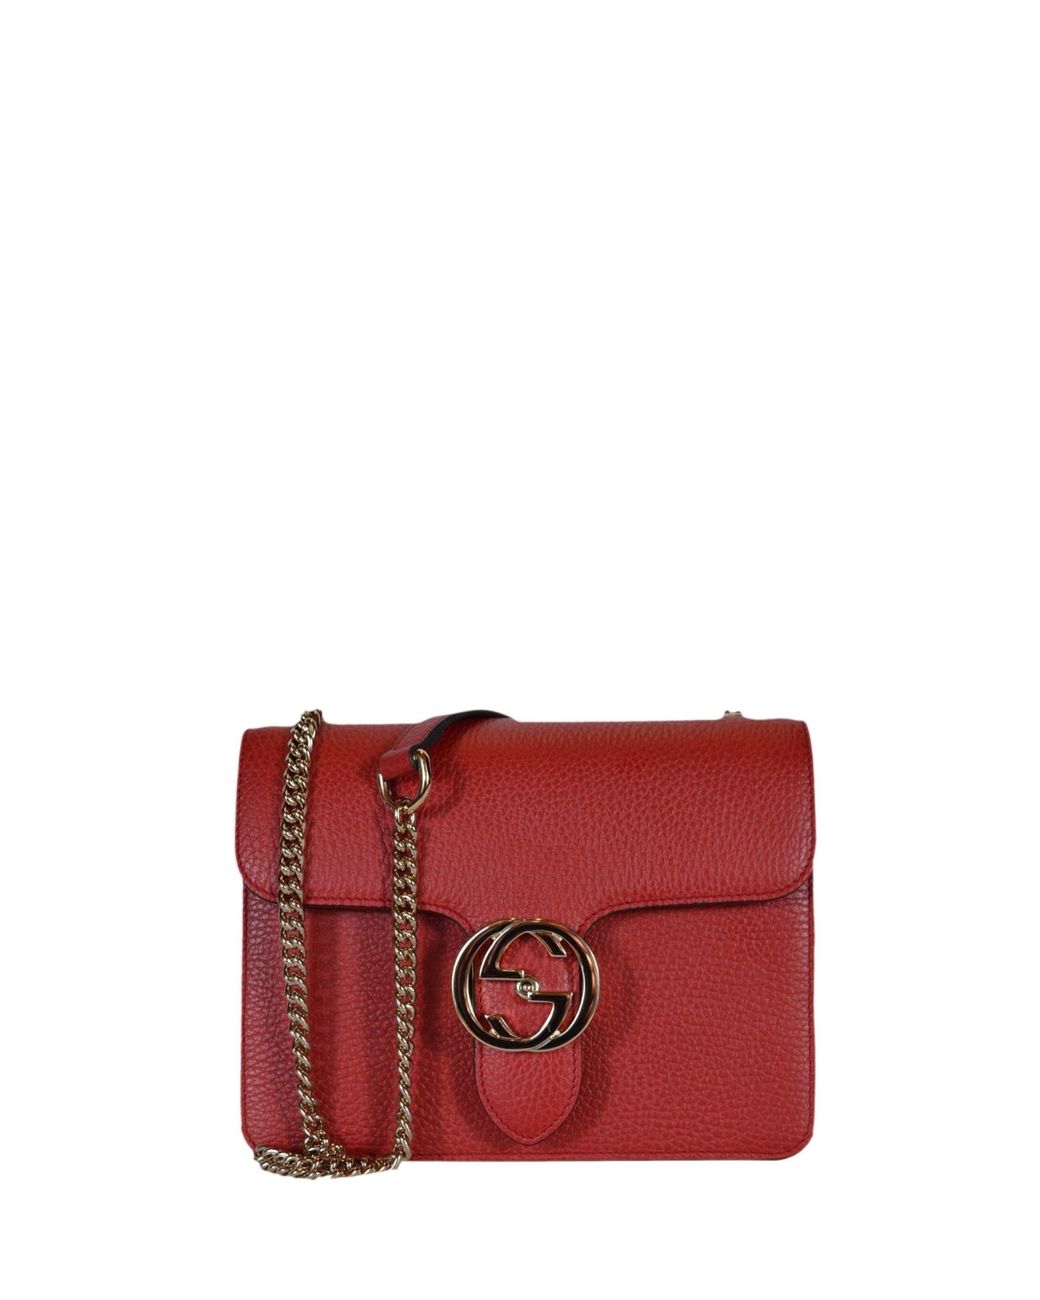 Gucci Interlocking GG Black Leather Shoulder Bag Pebble Handbag Italy New  Crossbody 